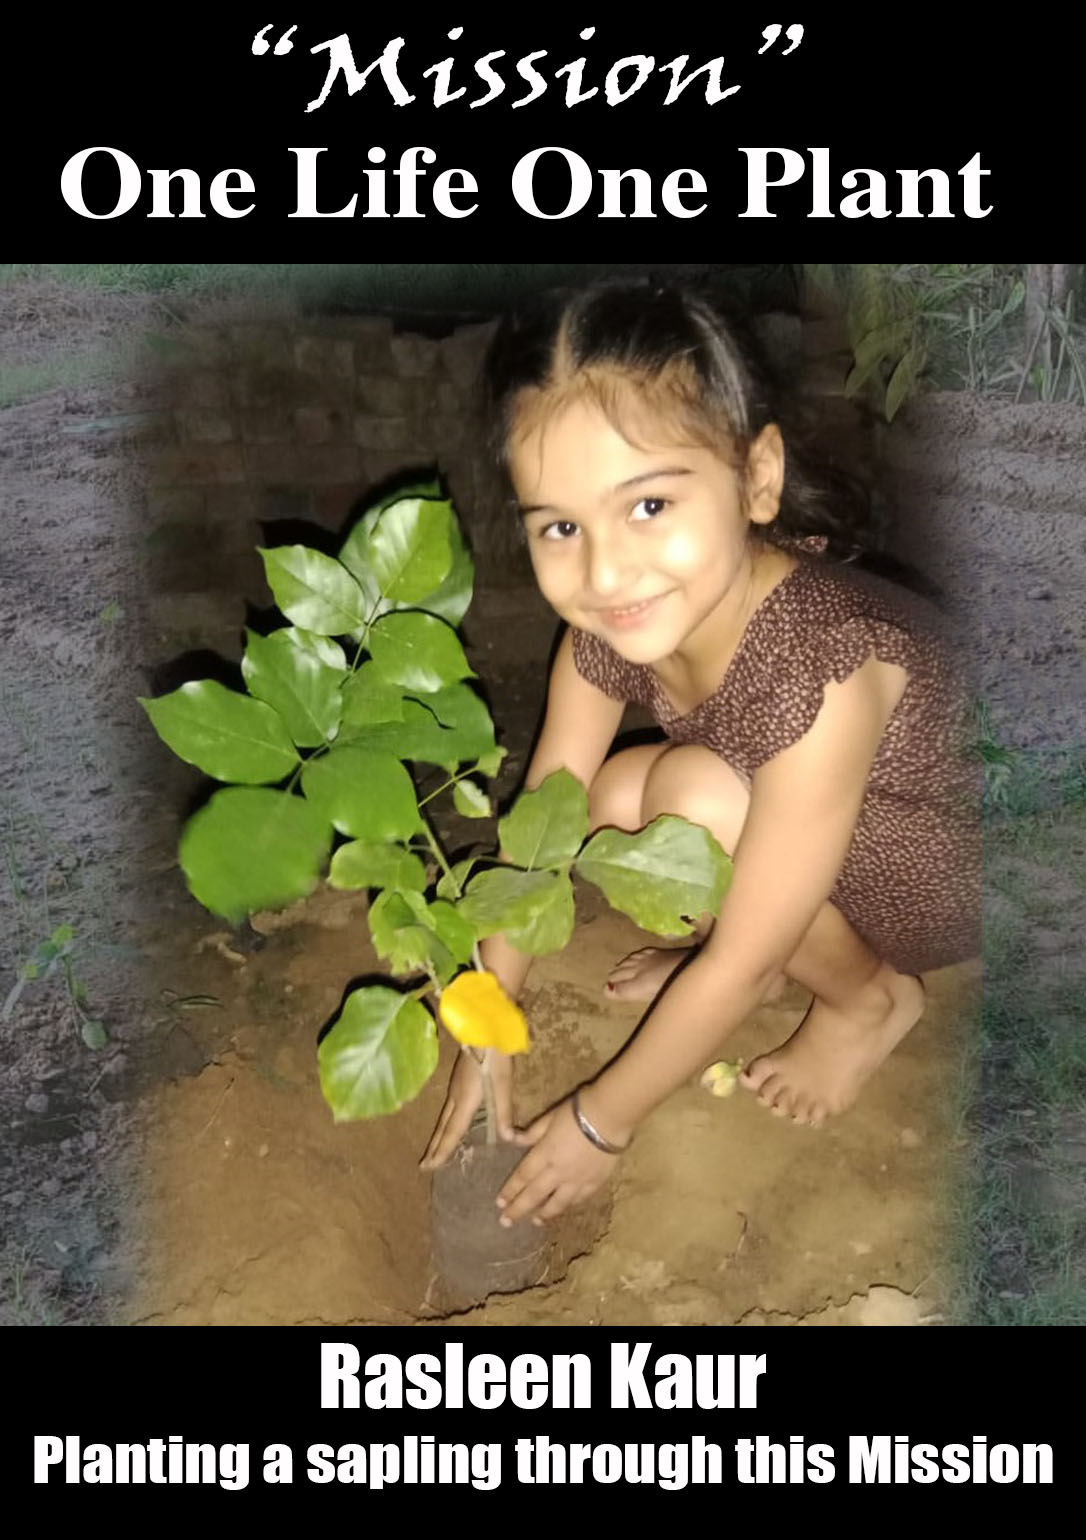 Mission “One Life One Plant” Rasleen Kaur Planting a sapling through this Mission